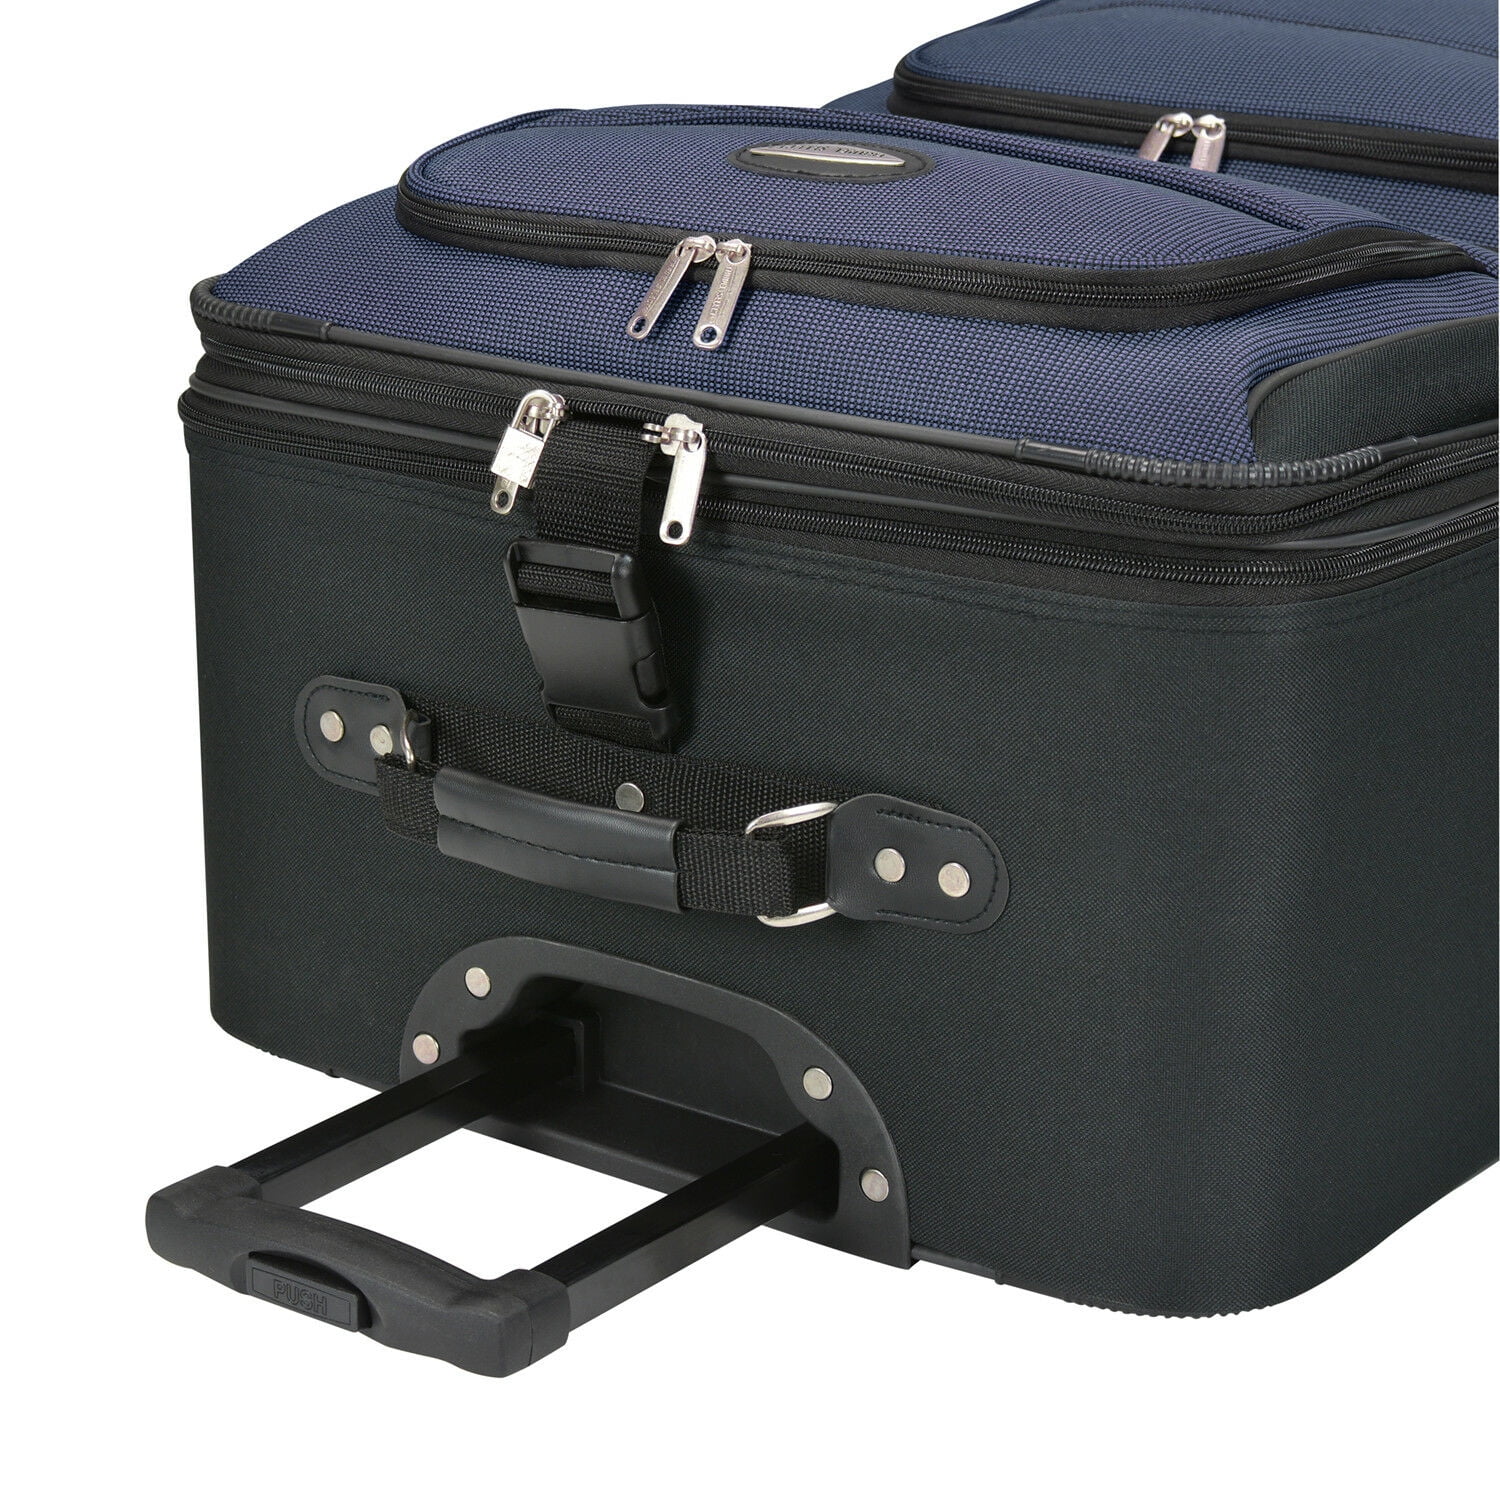 Travel Select Amsterdam 25” Expandable Rolling Upright Luggage Burgundy 